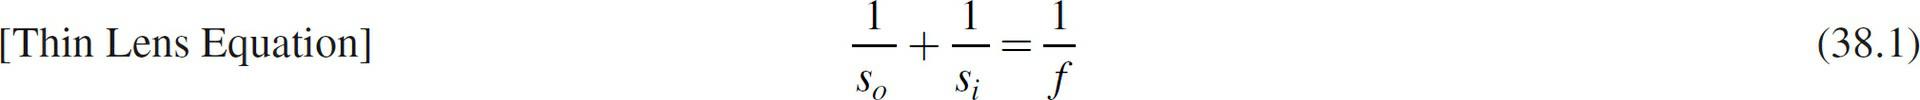 [Thin Lens Equation] =+=-=-=- So Si (38.1)